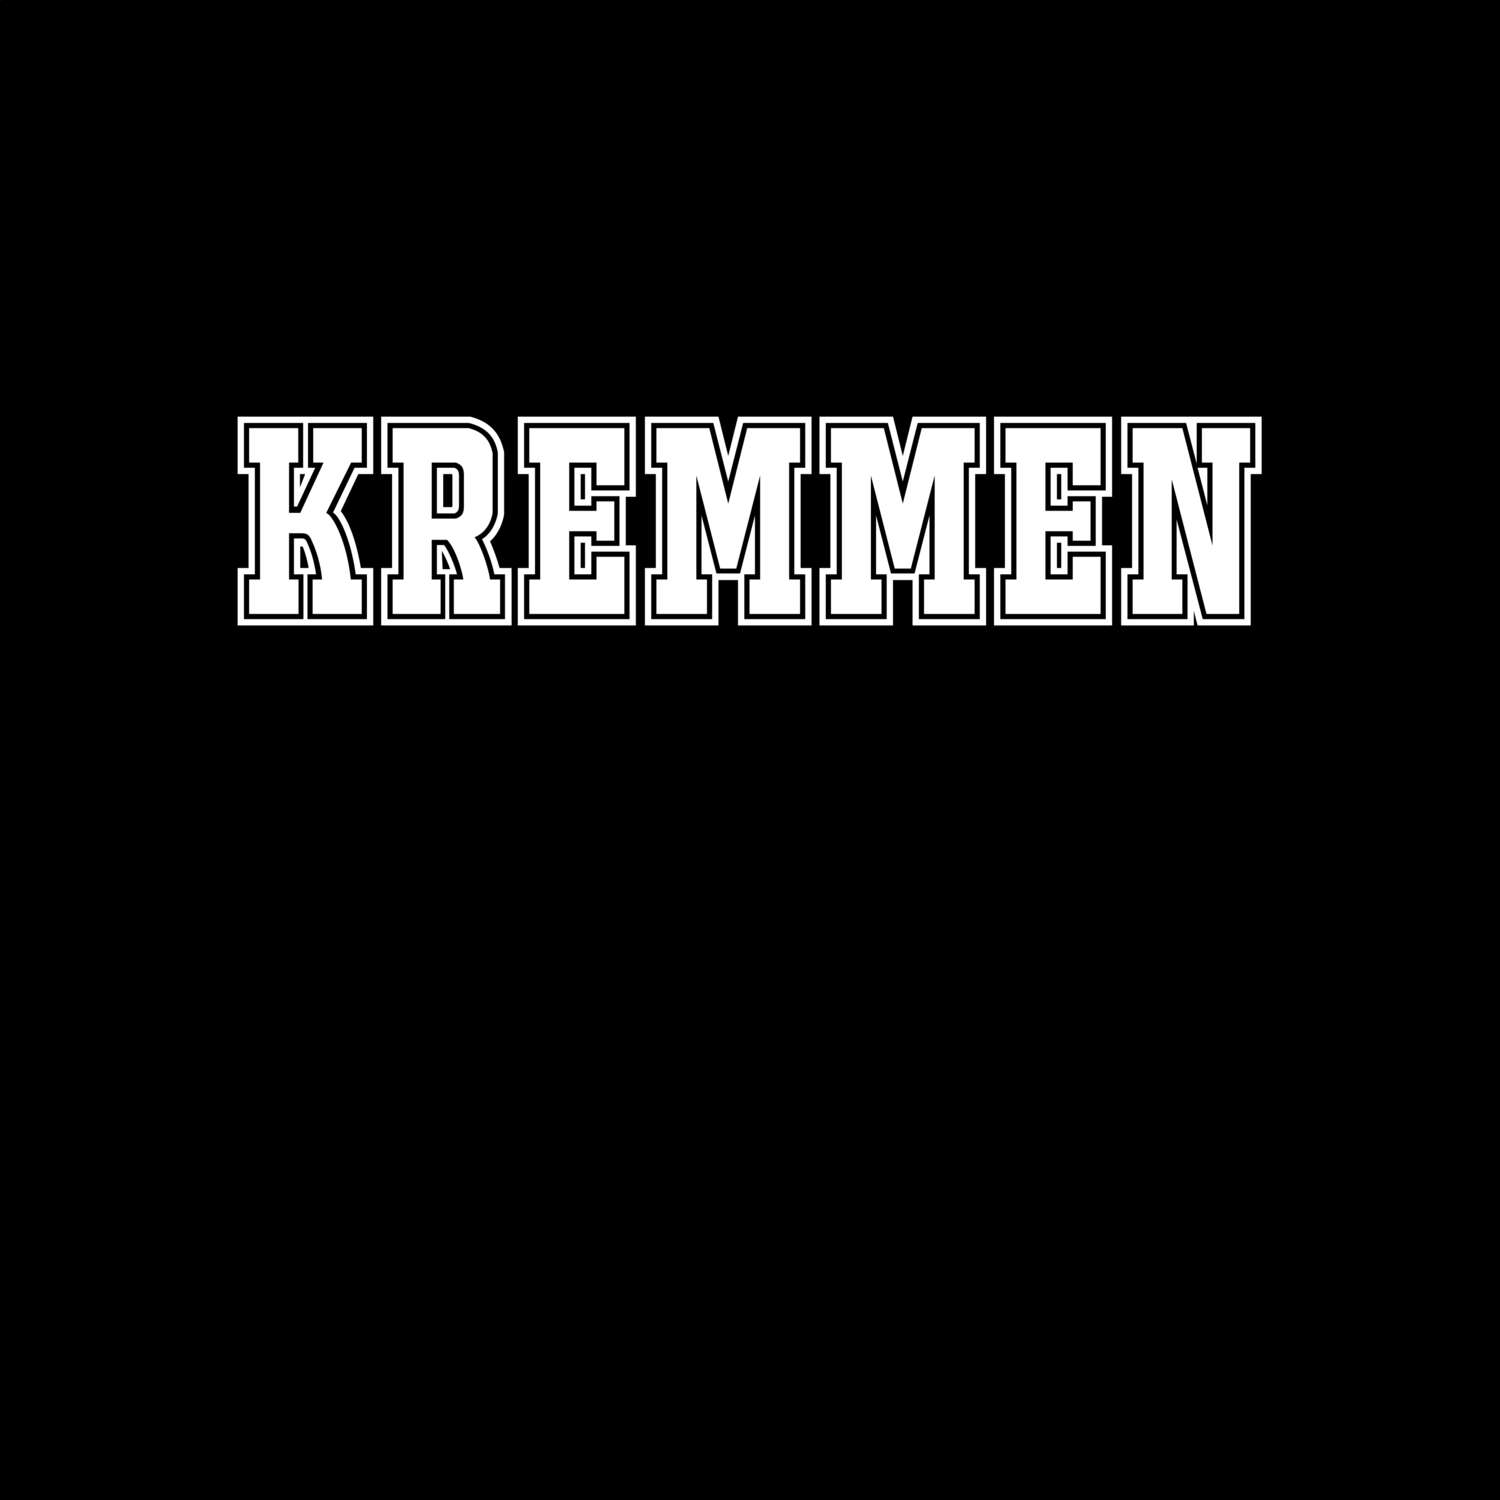 Kremmen T-Shirt »Classic«